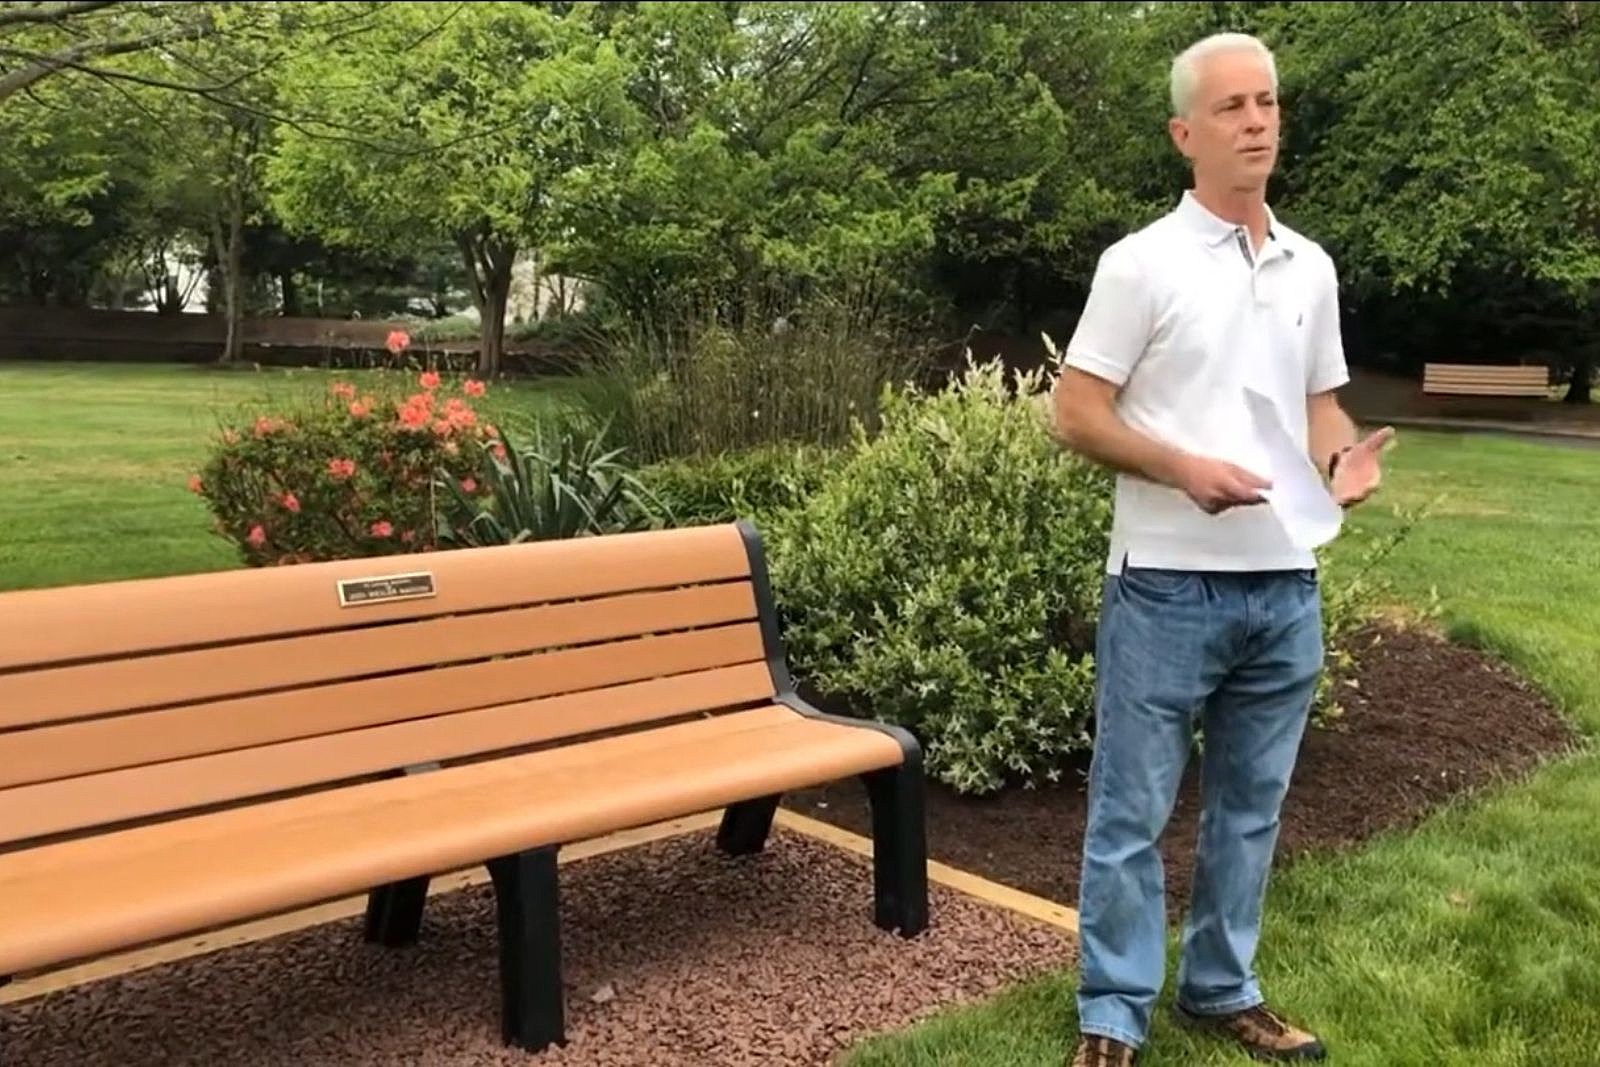 Bench dedicated to Jodi Marcou at Veterans Park in South Brunswick in May